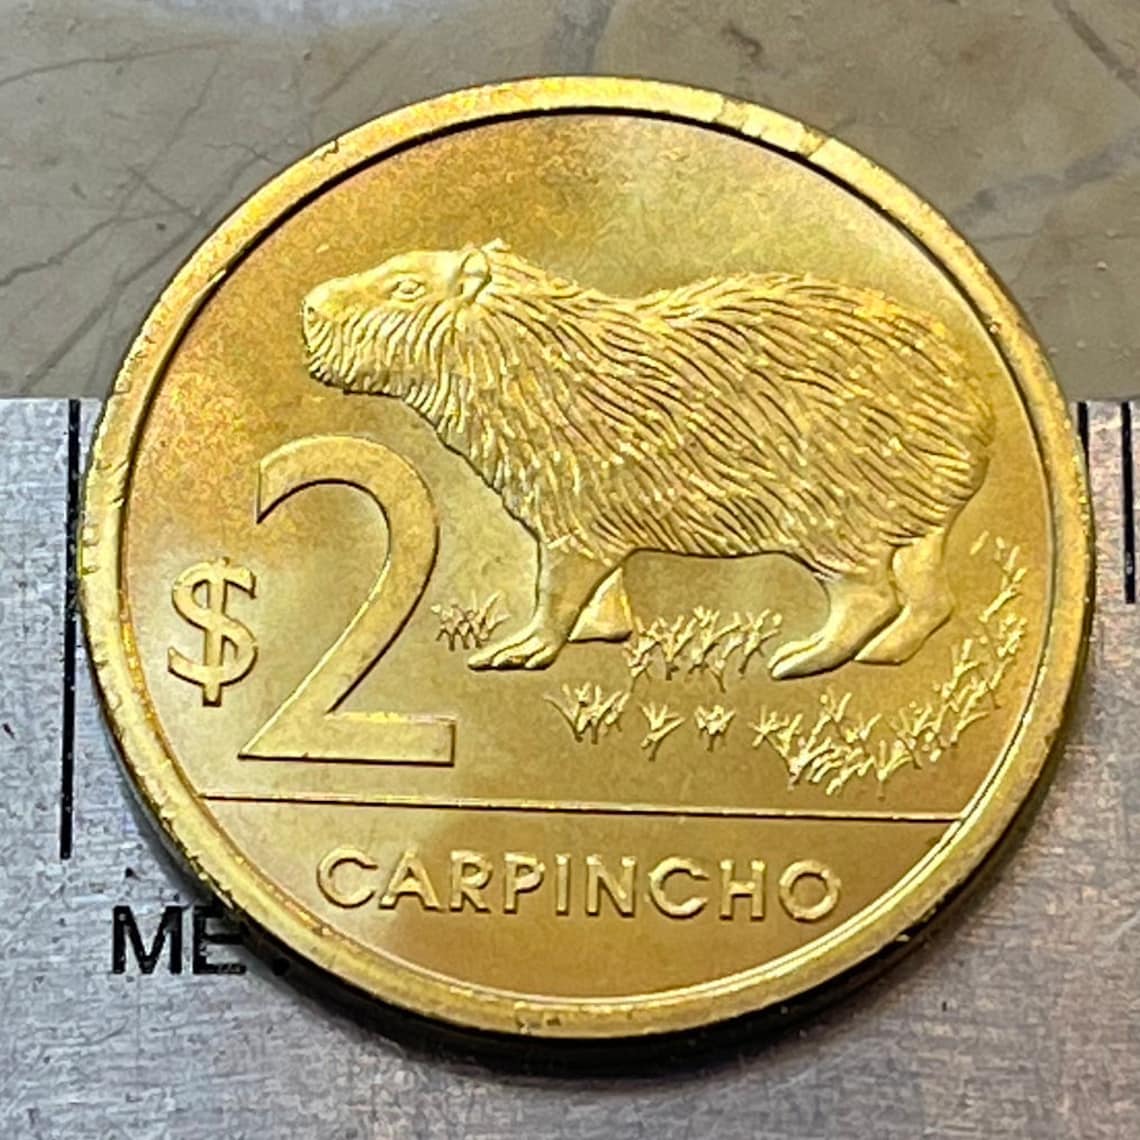 Capybara 2 Pesos Uruguay Authentic Coin Money for Jewelry and | Etsy